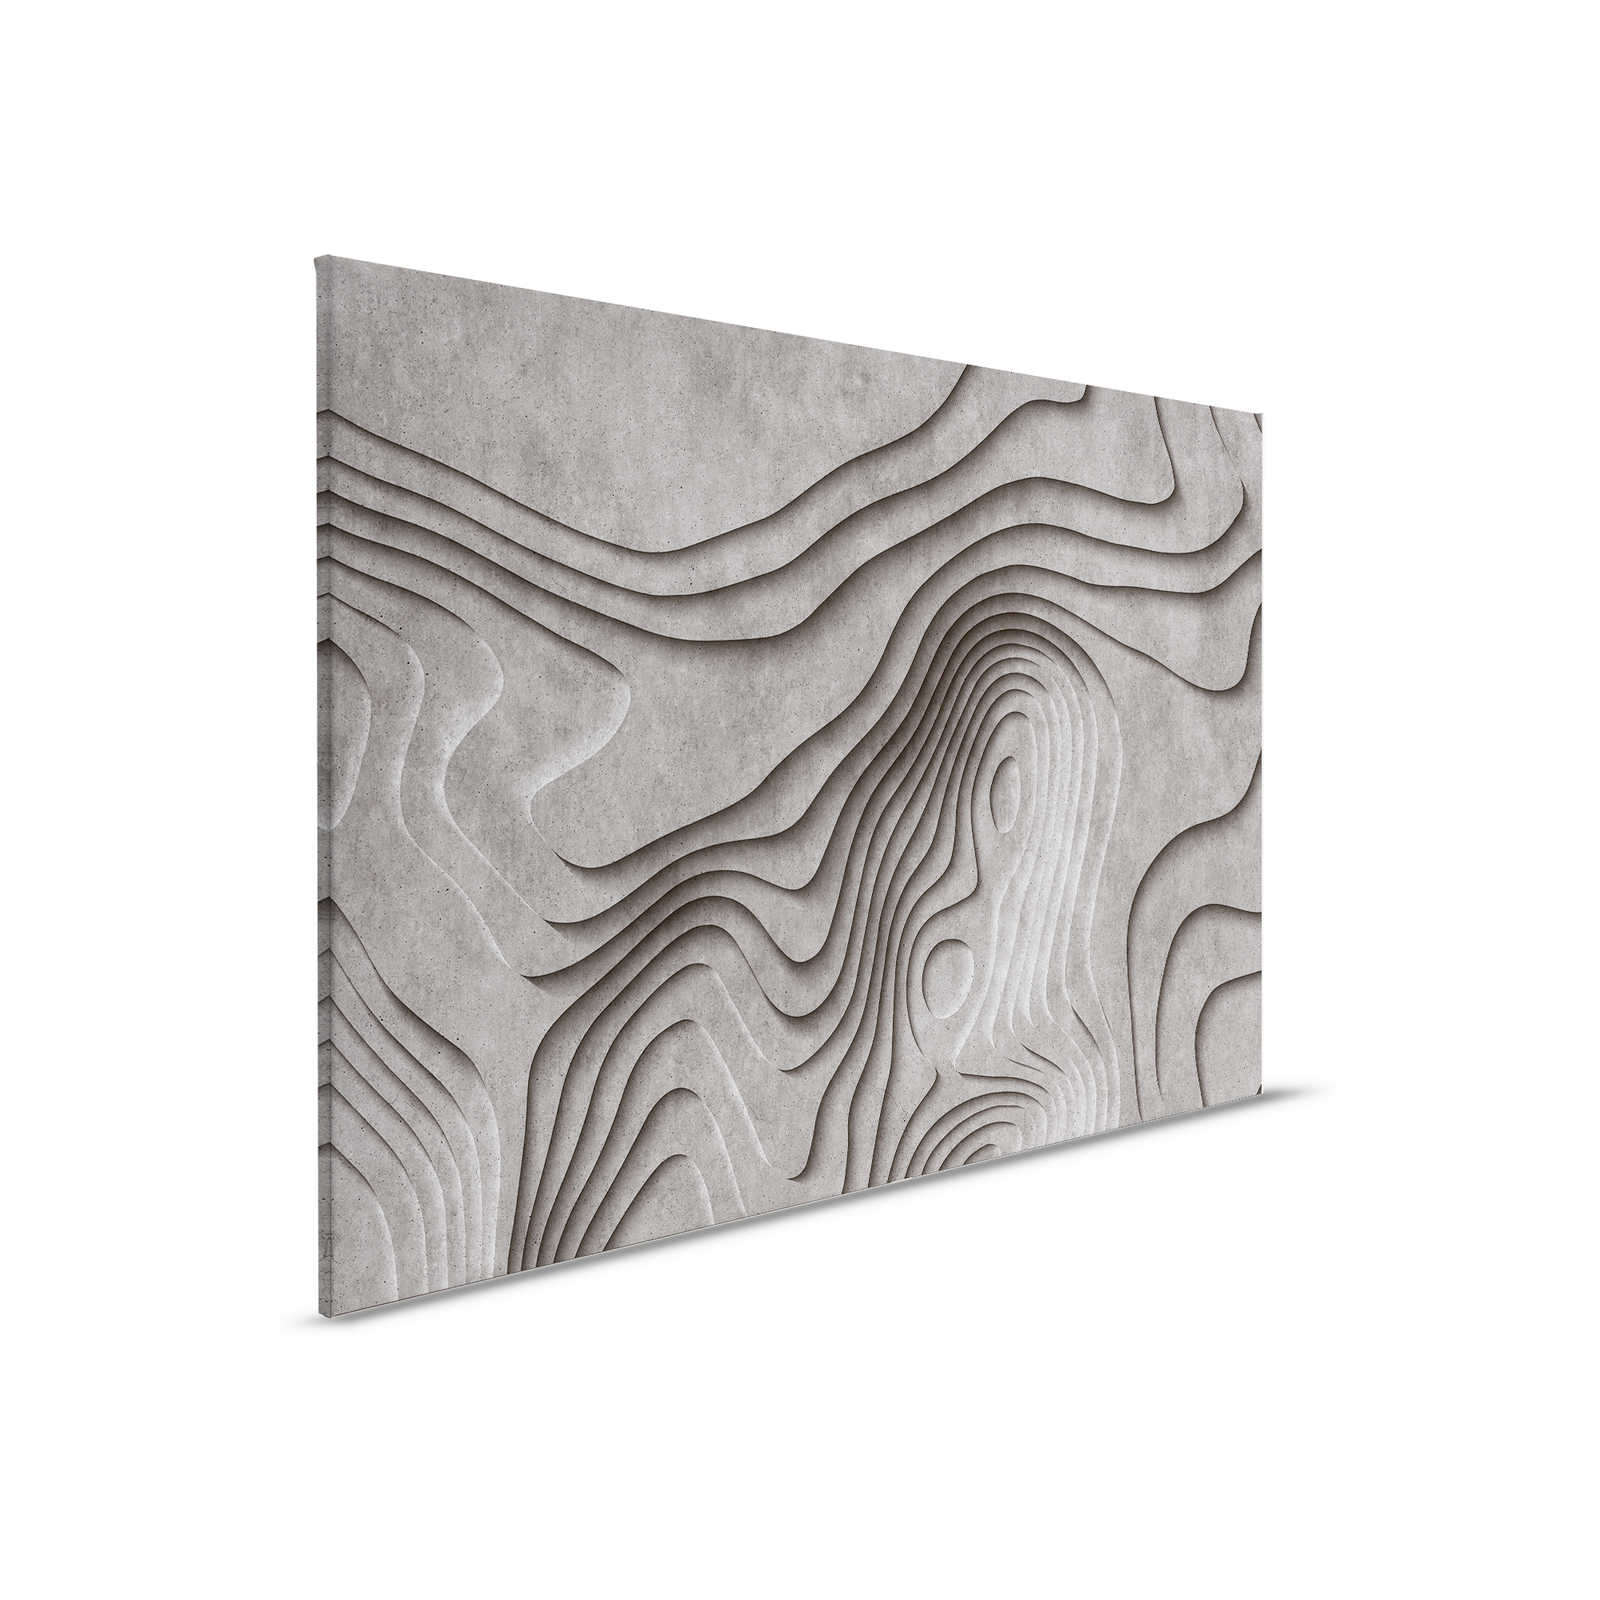 Canyon 1 - Cool 3D Concrete Canyon Canvas Painting - 0.90 m x 0.60 m
